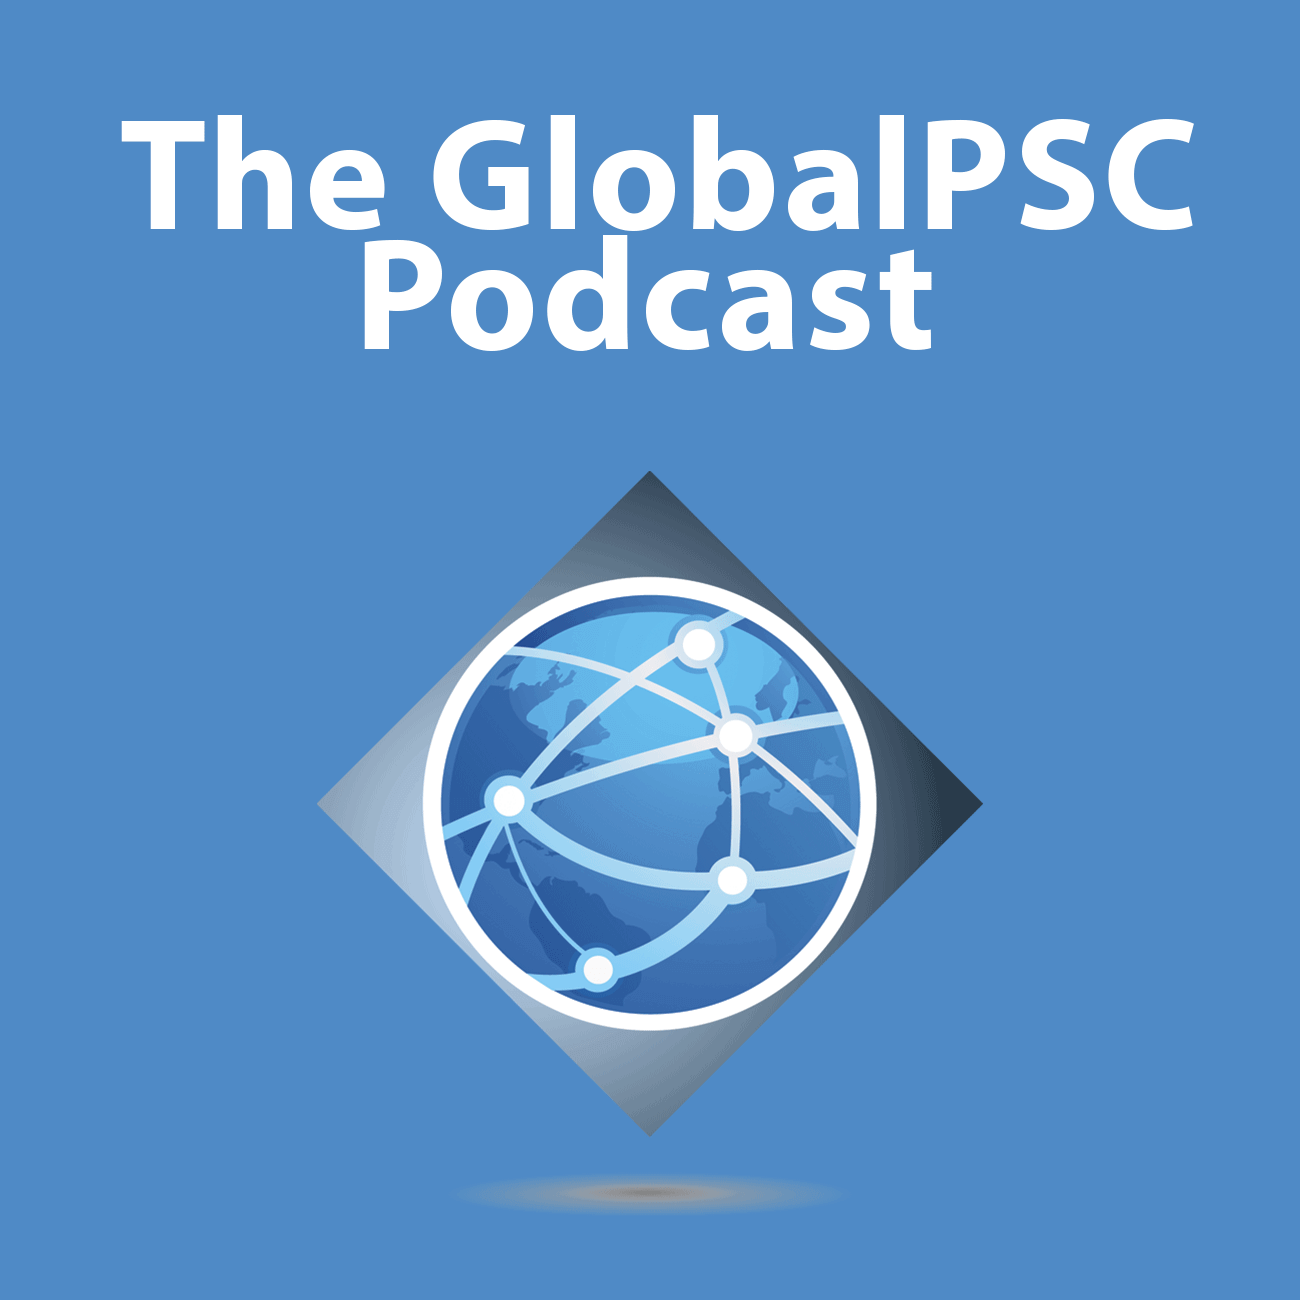 New GlobalPSC Podcast on Plastics